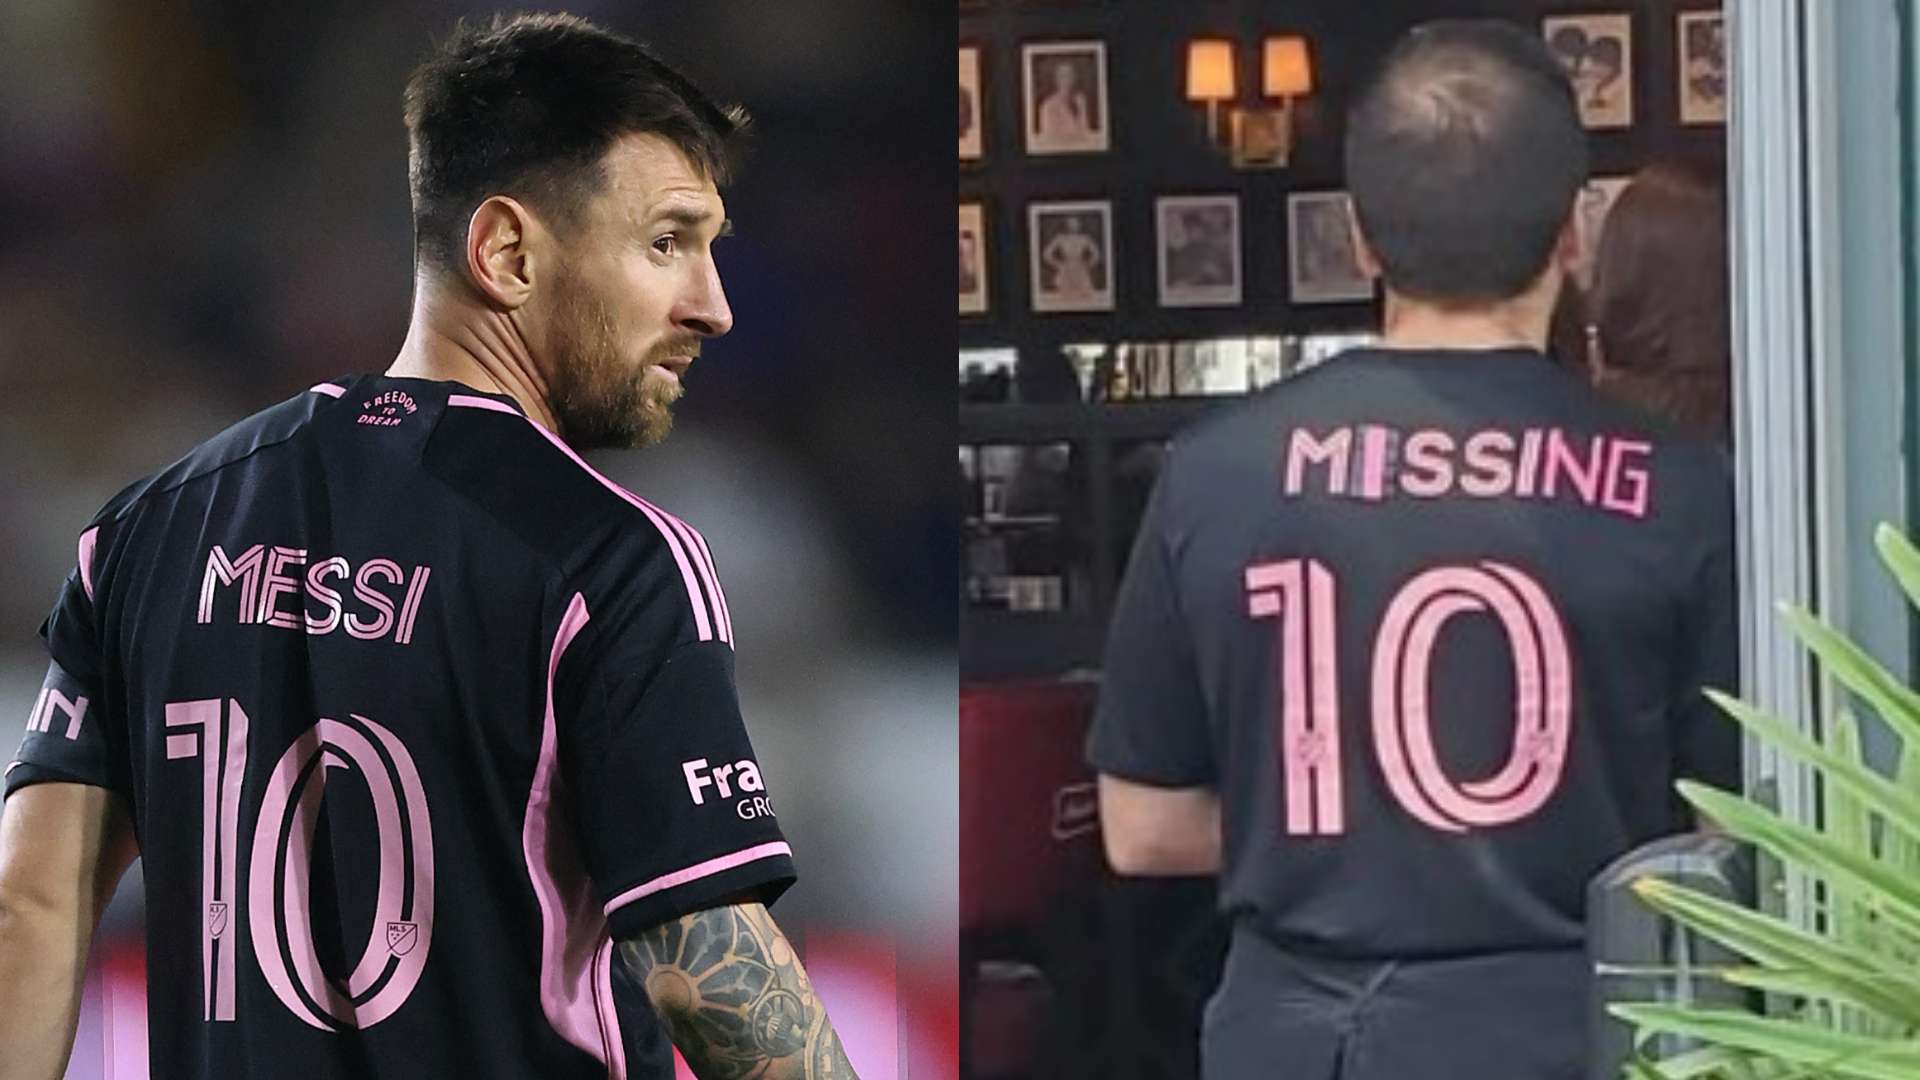 Lionel Messi missing fans shirts